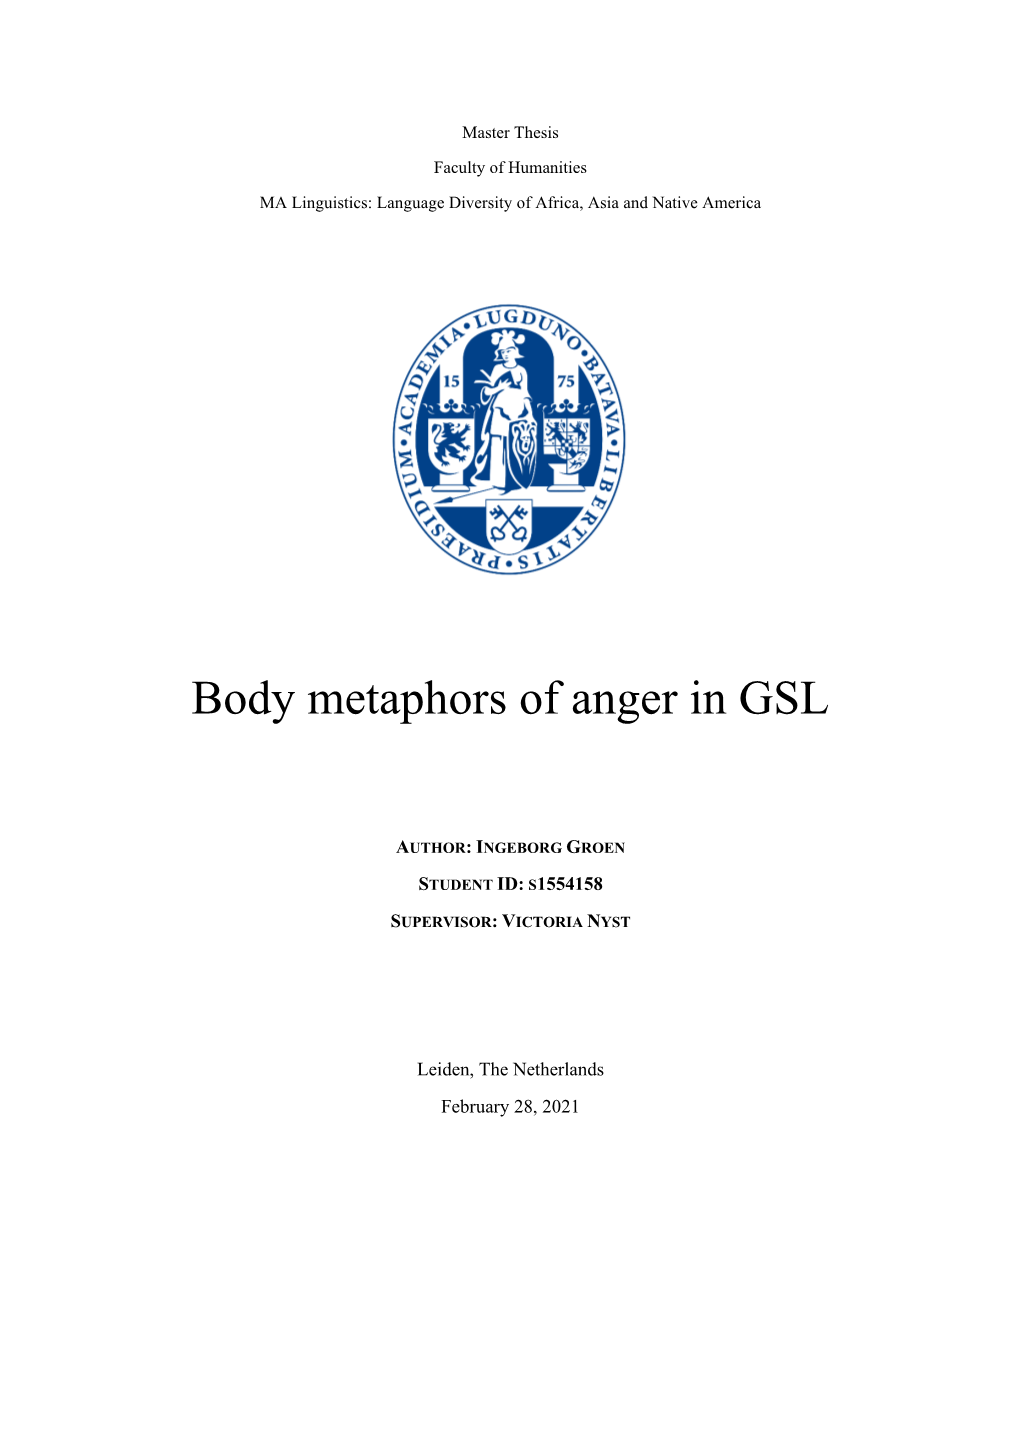 Body Metaphors of Anger in GSL